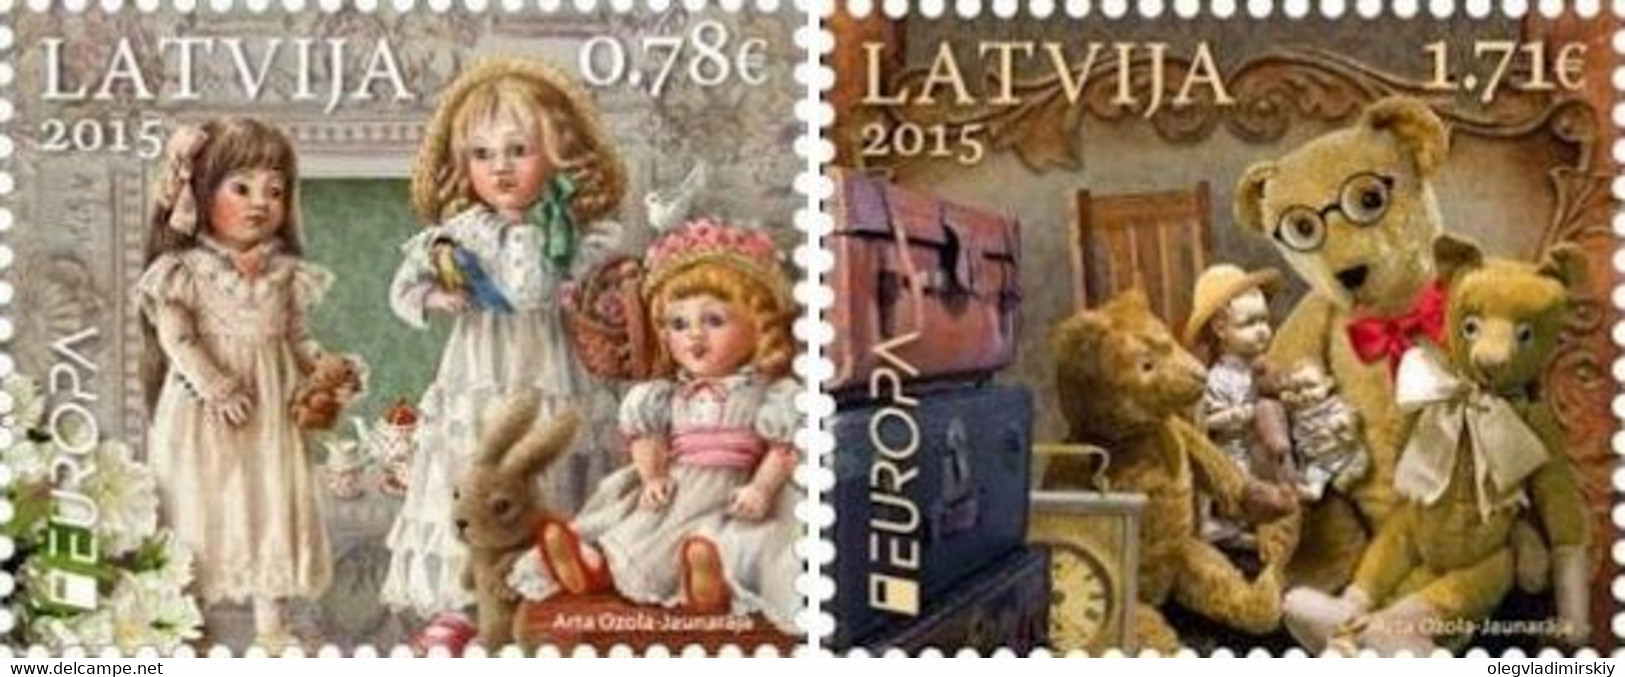 Latvia 2015 Europa CEPT Old Toys Set Of 2 Stamps Mint - Poppen